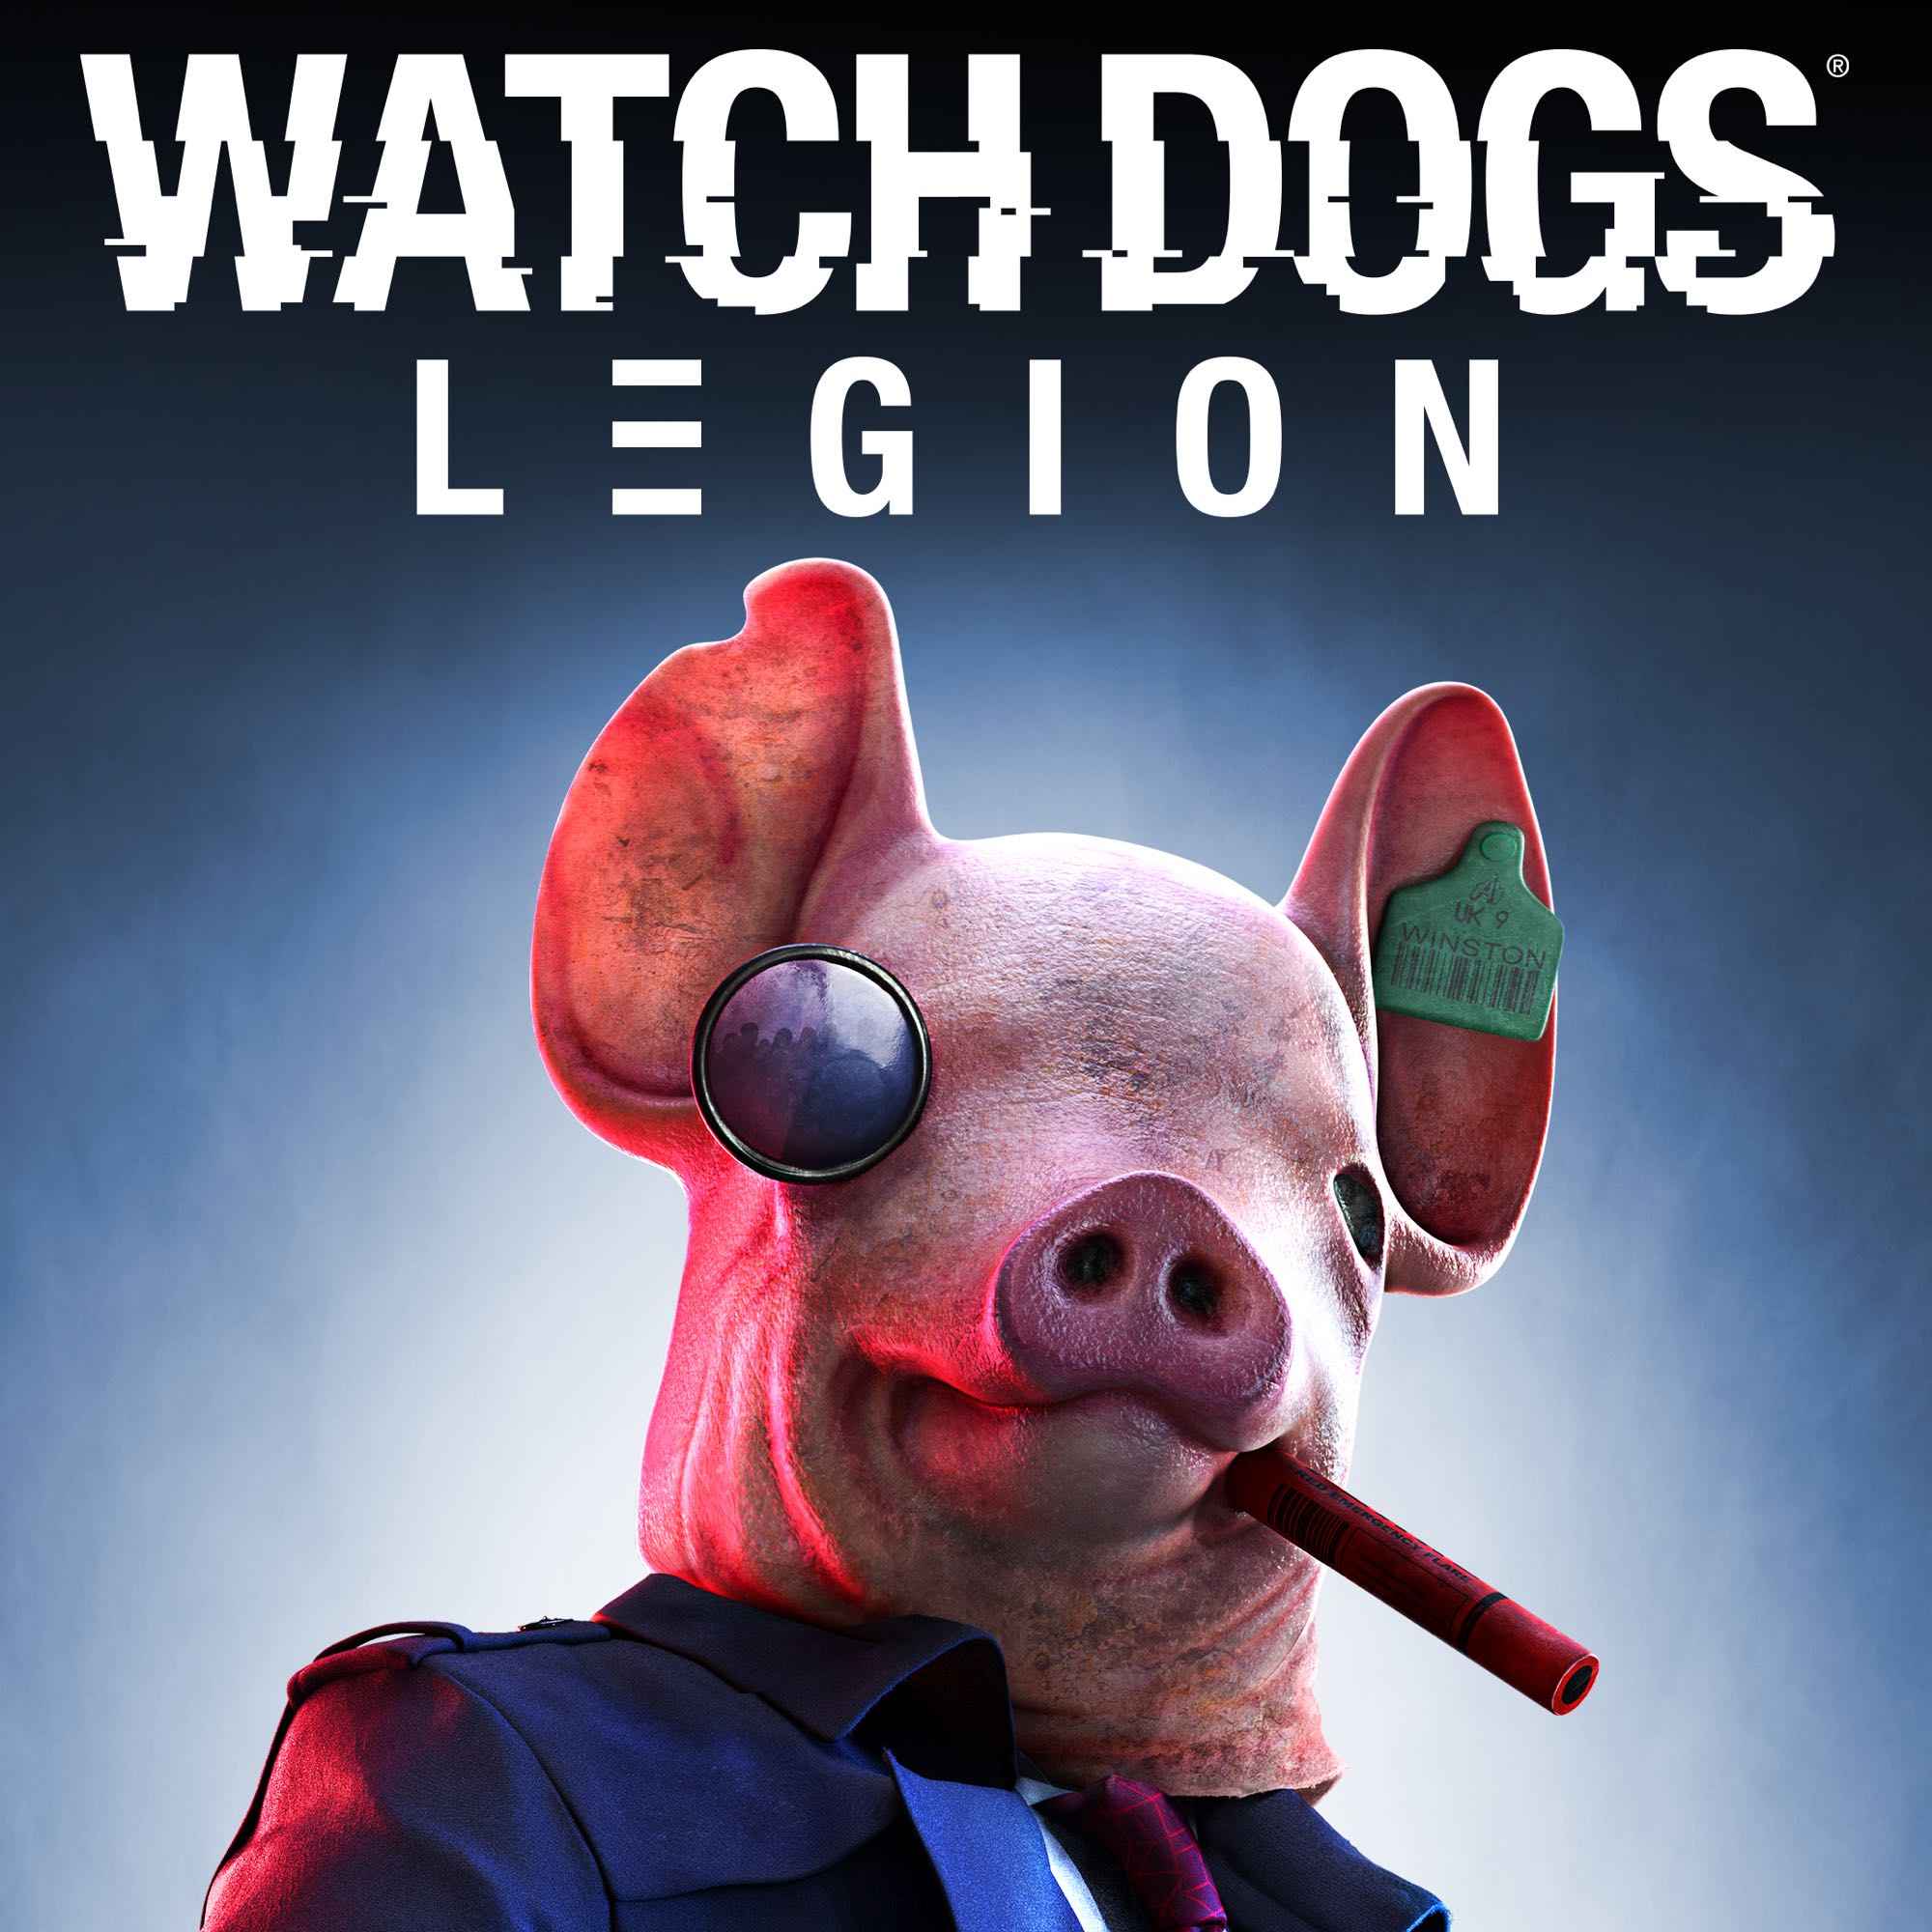 看门狗3：军团 | Watch Dogs: Legion